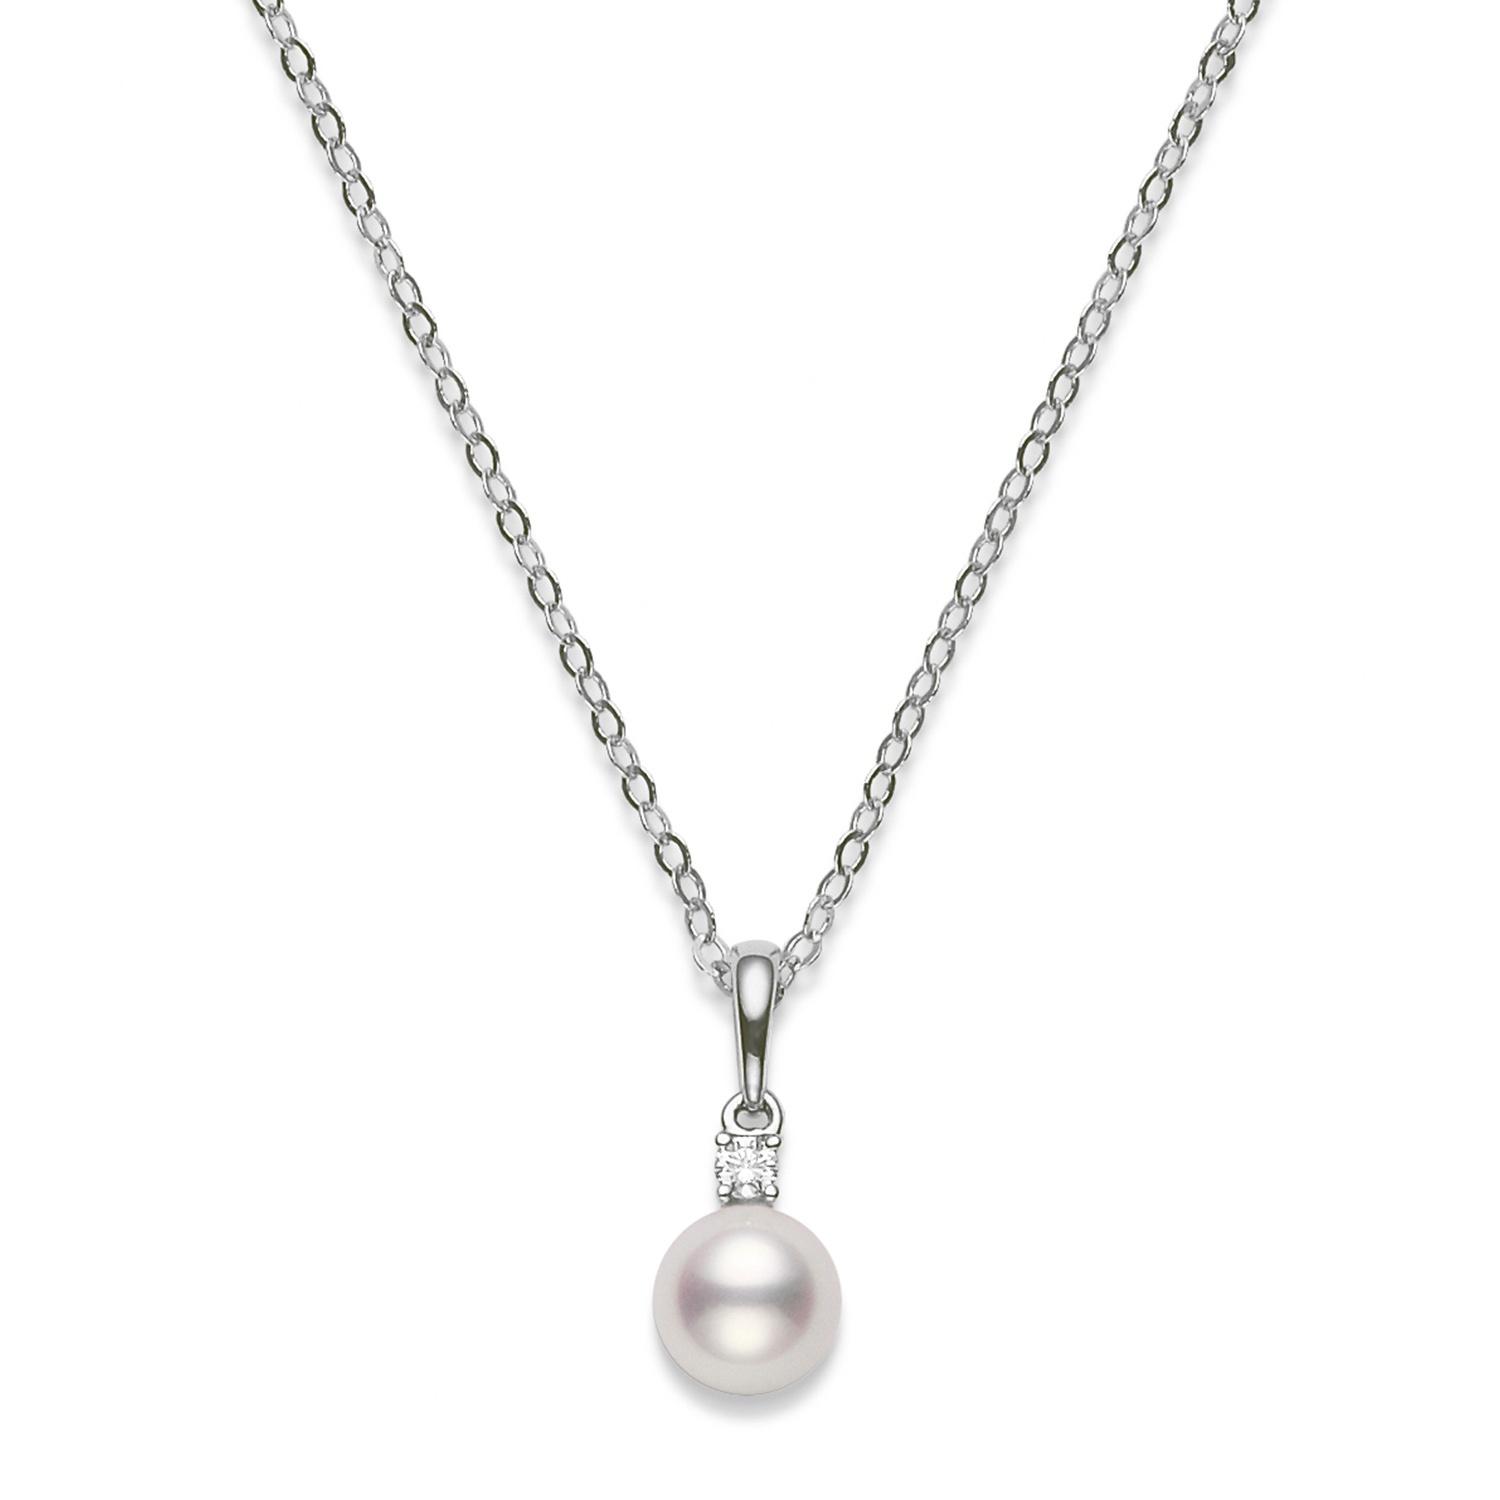 Mikimoto 6.5-6mm A White Pearl and Diamond Pendant Necklace